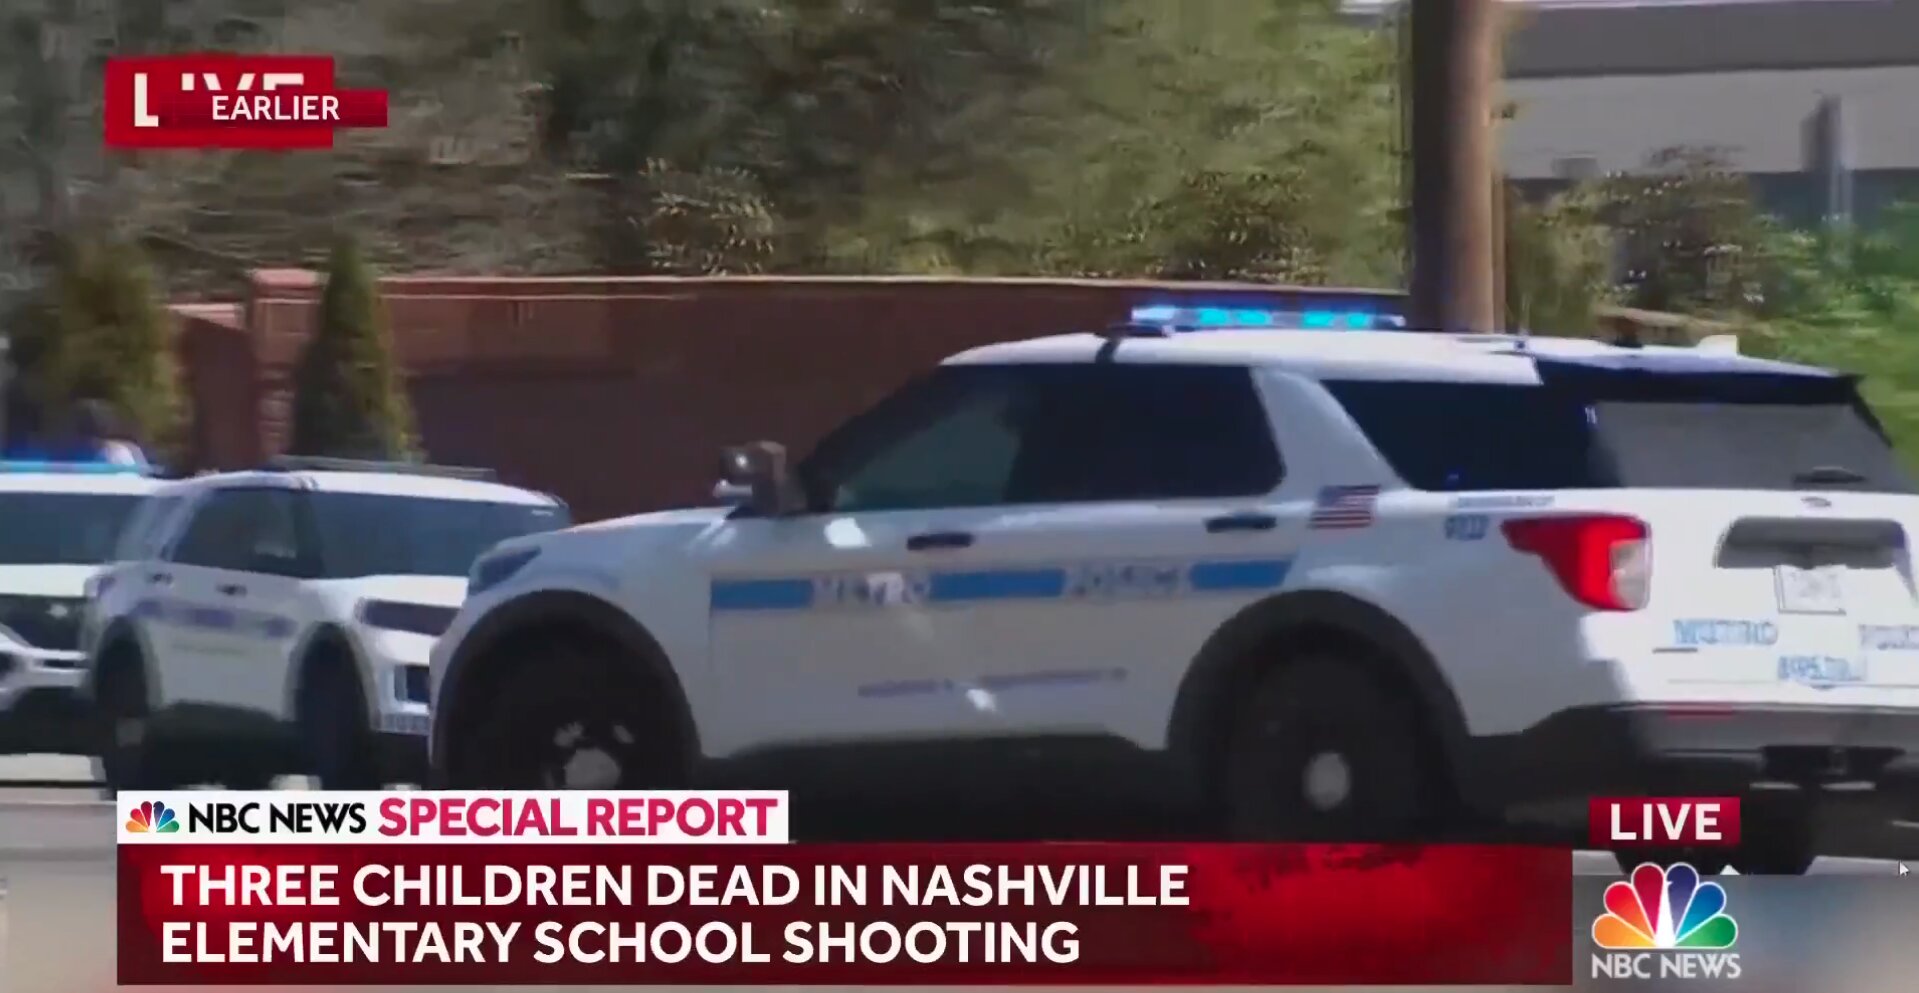  -; - ?E CHILDREN DEAD IN NASHVILL B - ELEMENTARY SCHOOL SHOOTING w @ NBC NEWS 